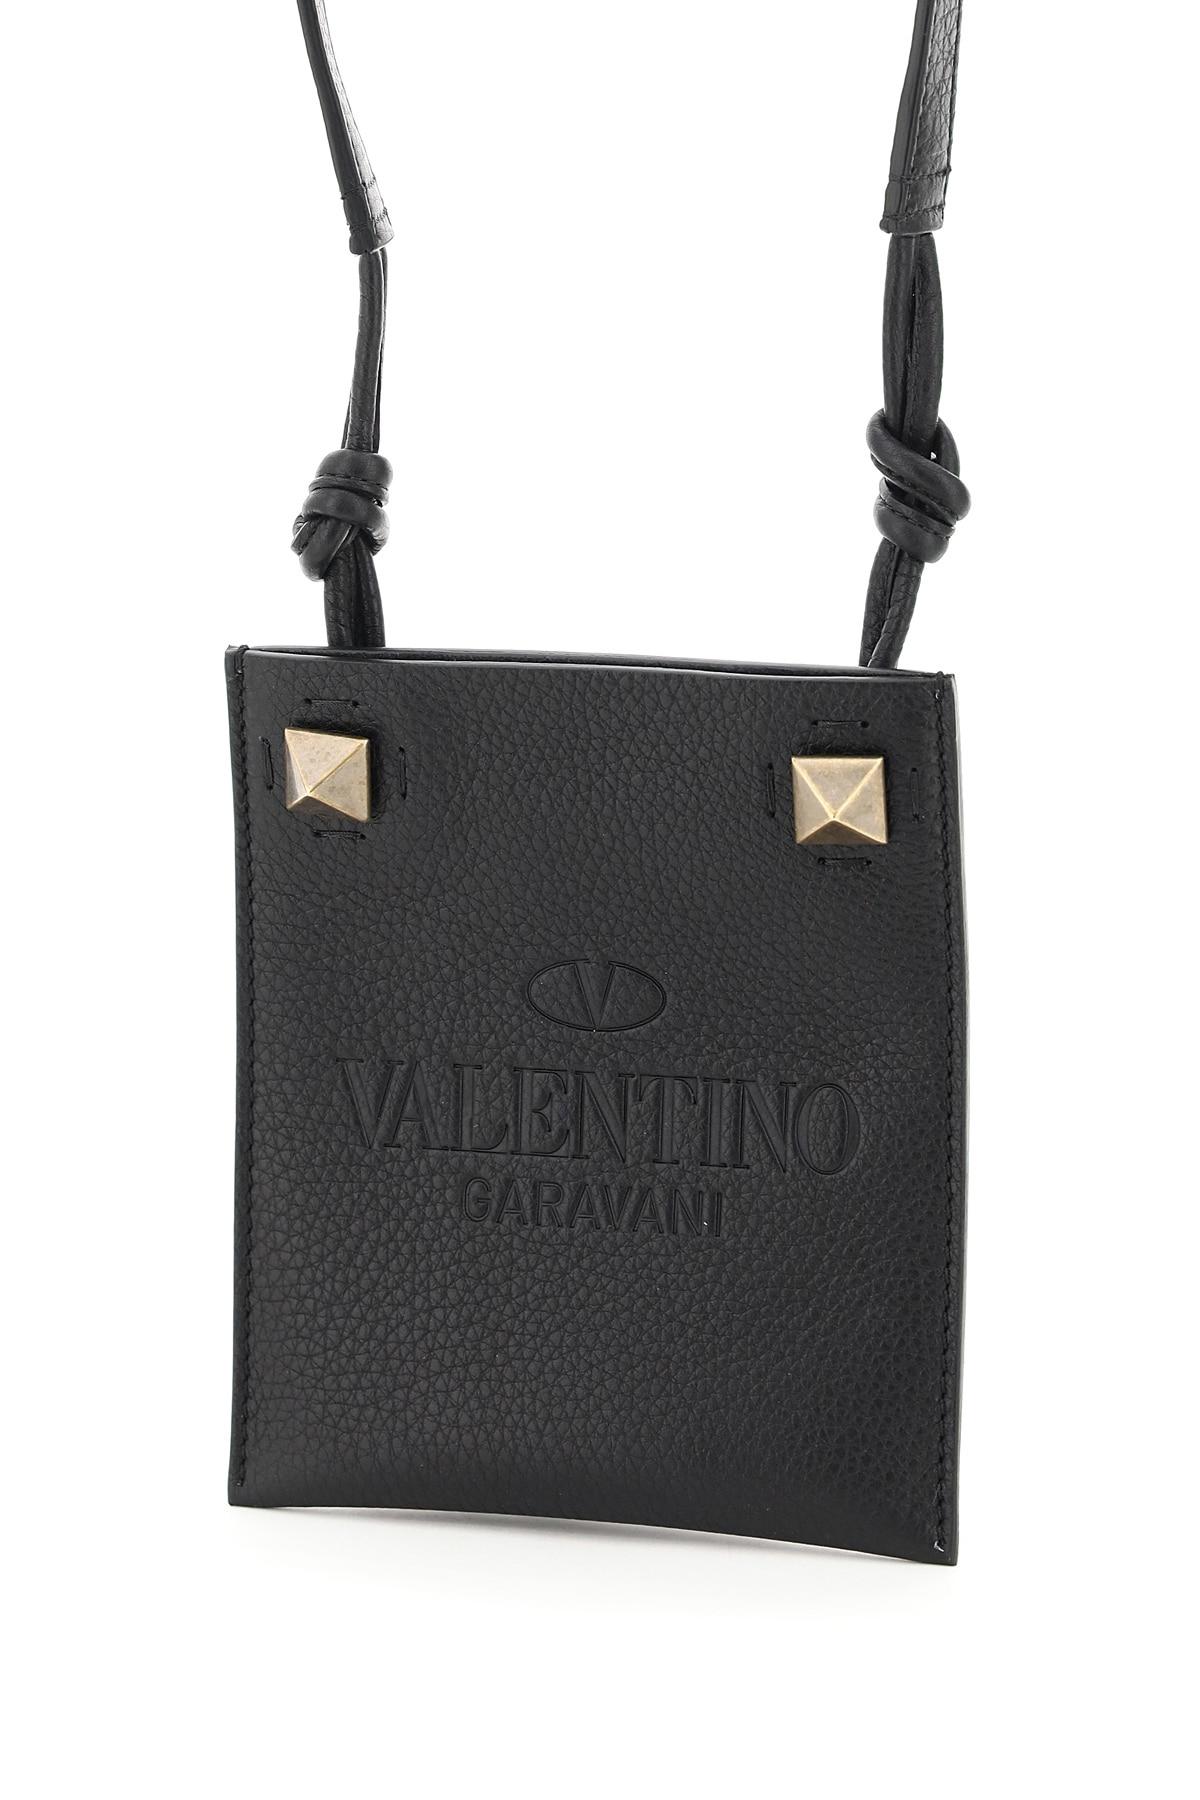 Valentino Garavani Leather Identity Phone Case With Shoulder Strap 